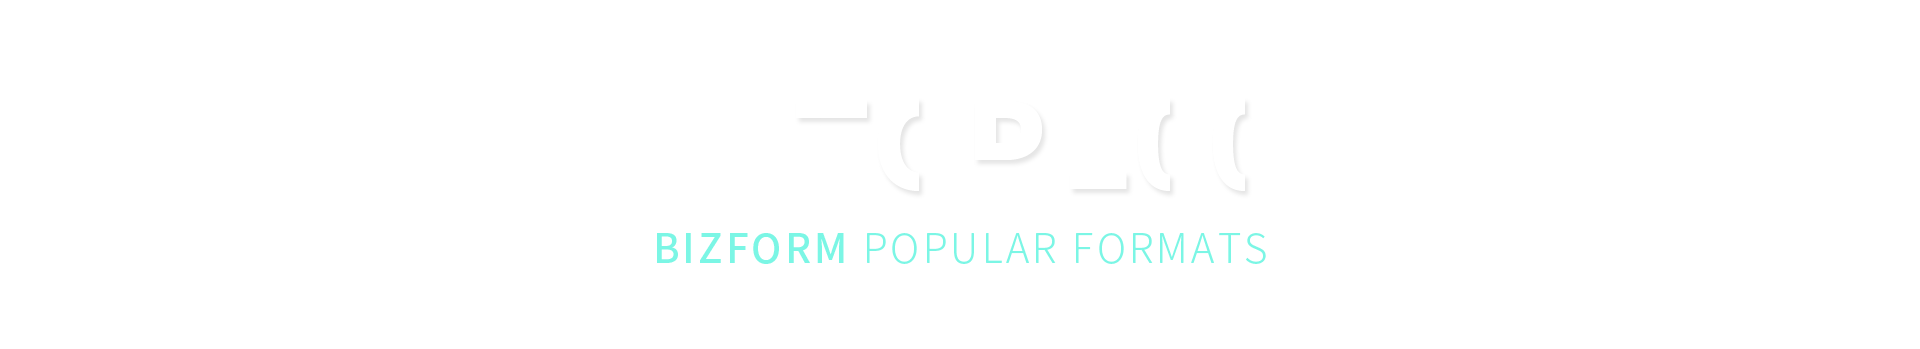 top100_main_banner